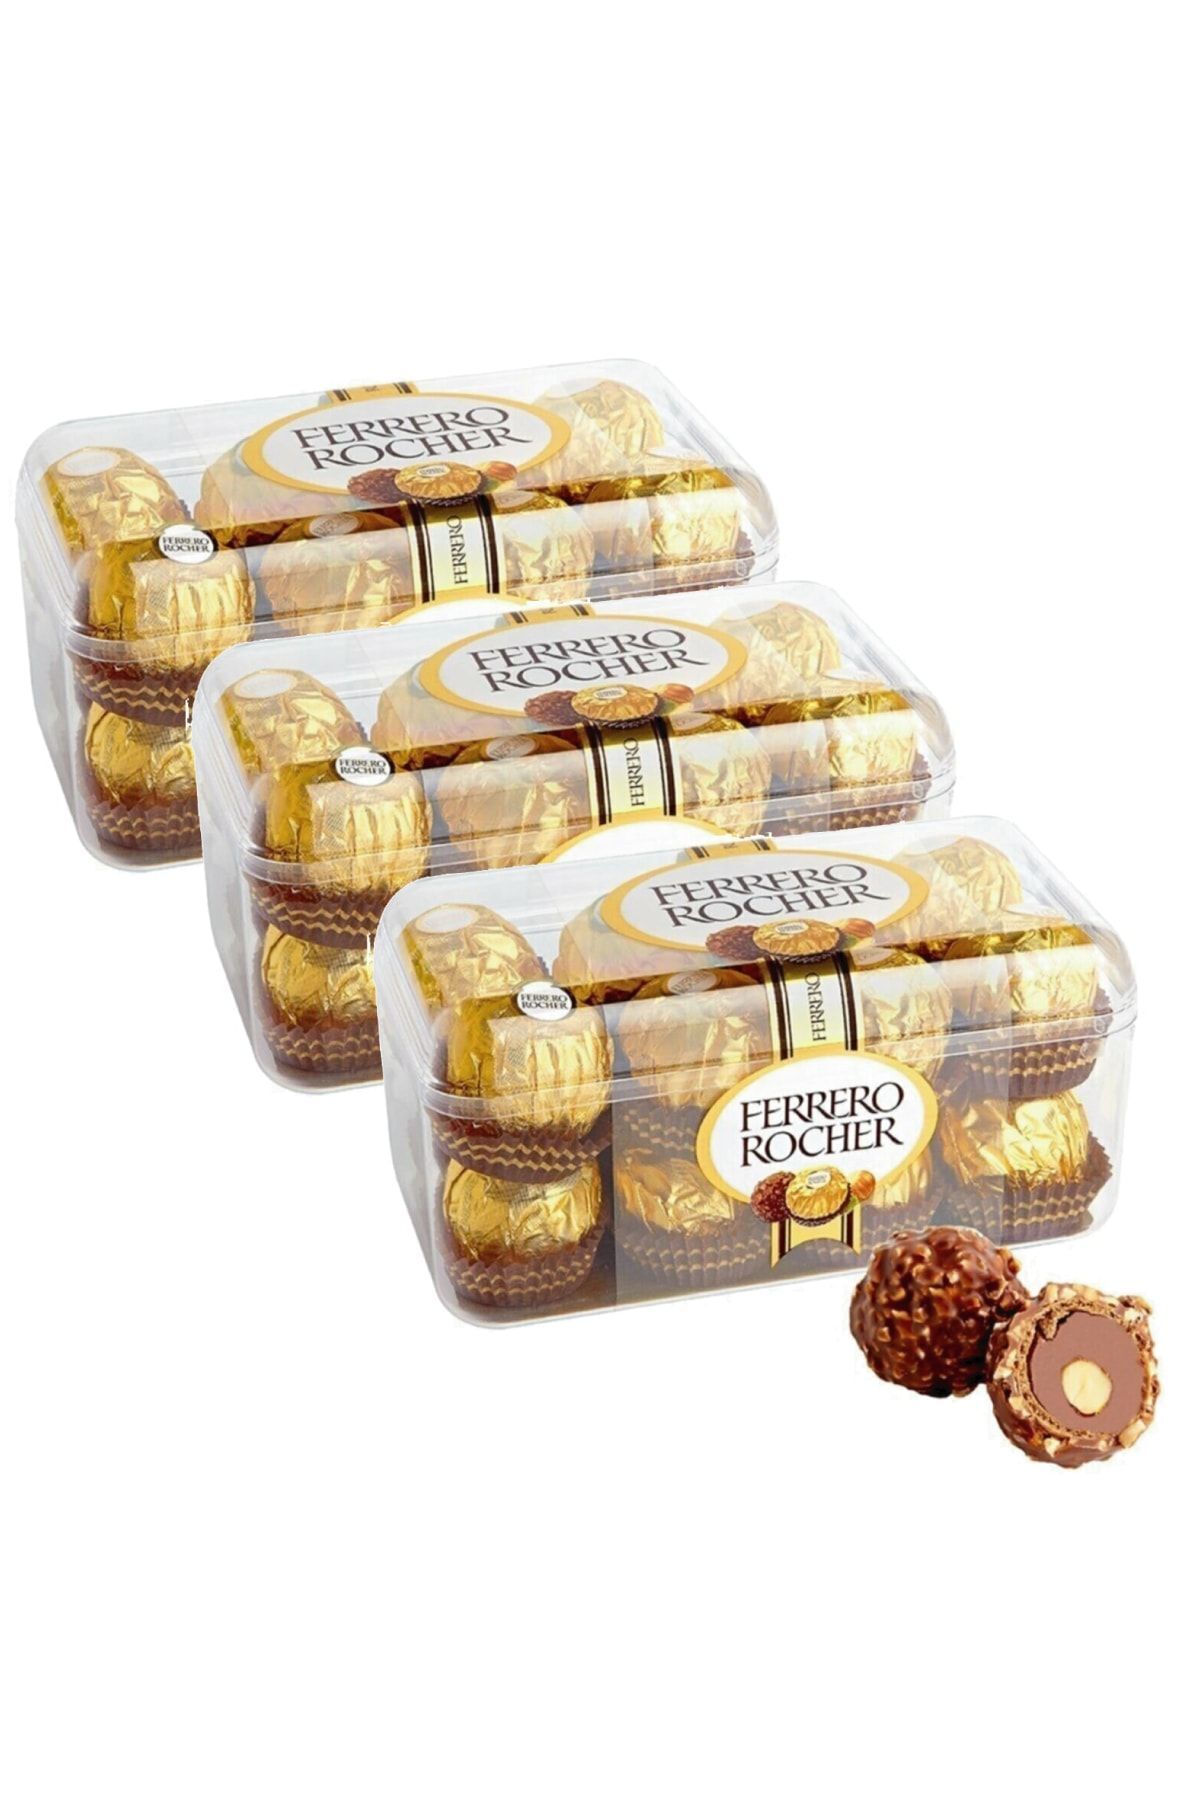 Ferrero Rocher Fındıklı Truffle Çikolata T16 200 gr Altın Rocher Gold Rocher Avantaj X 3